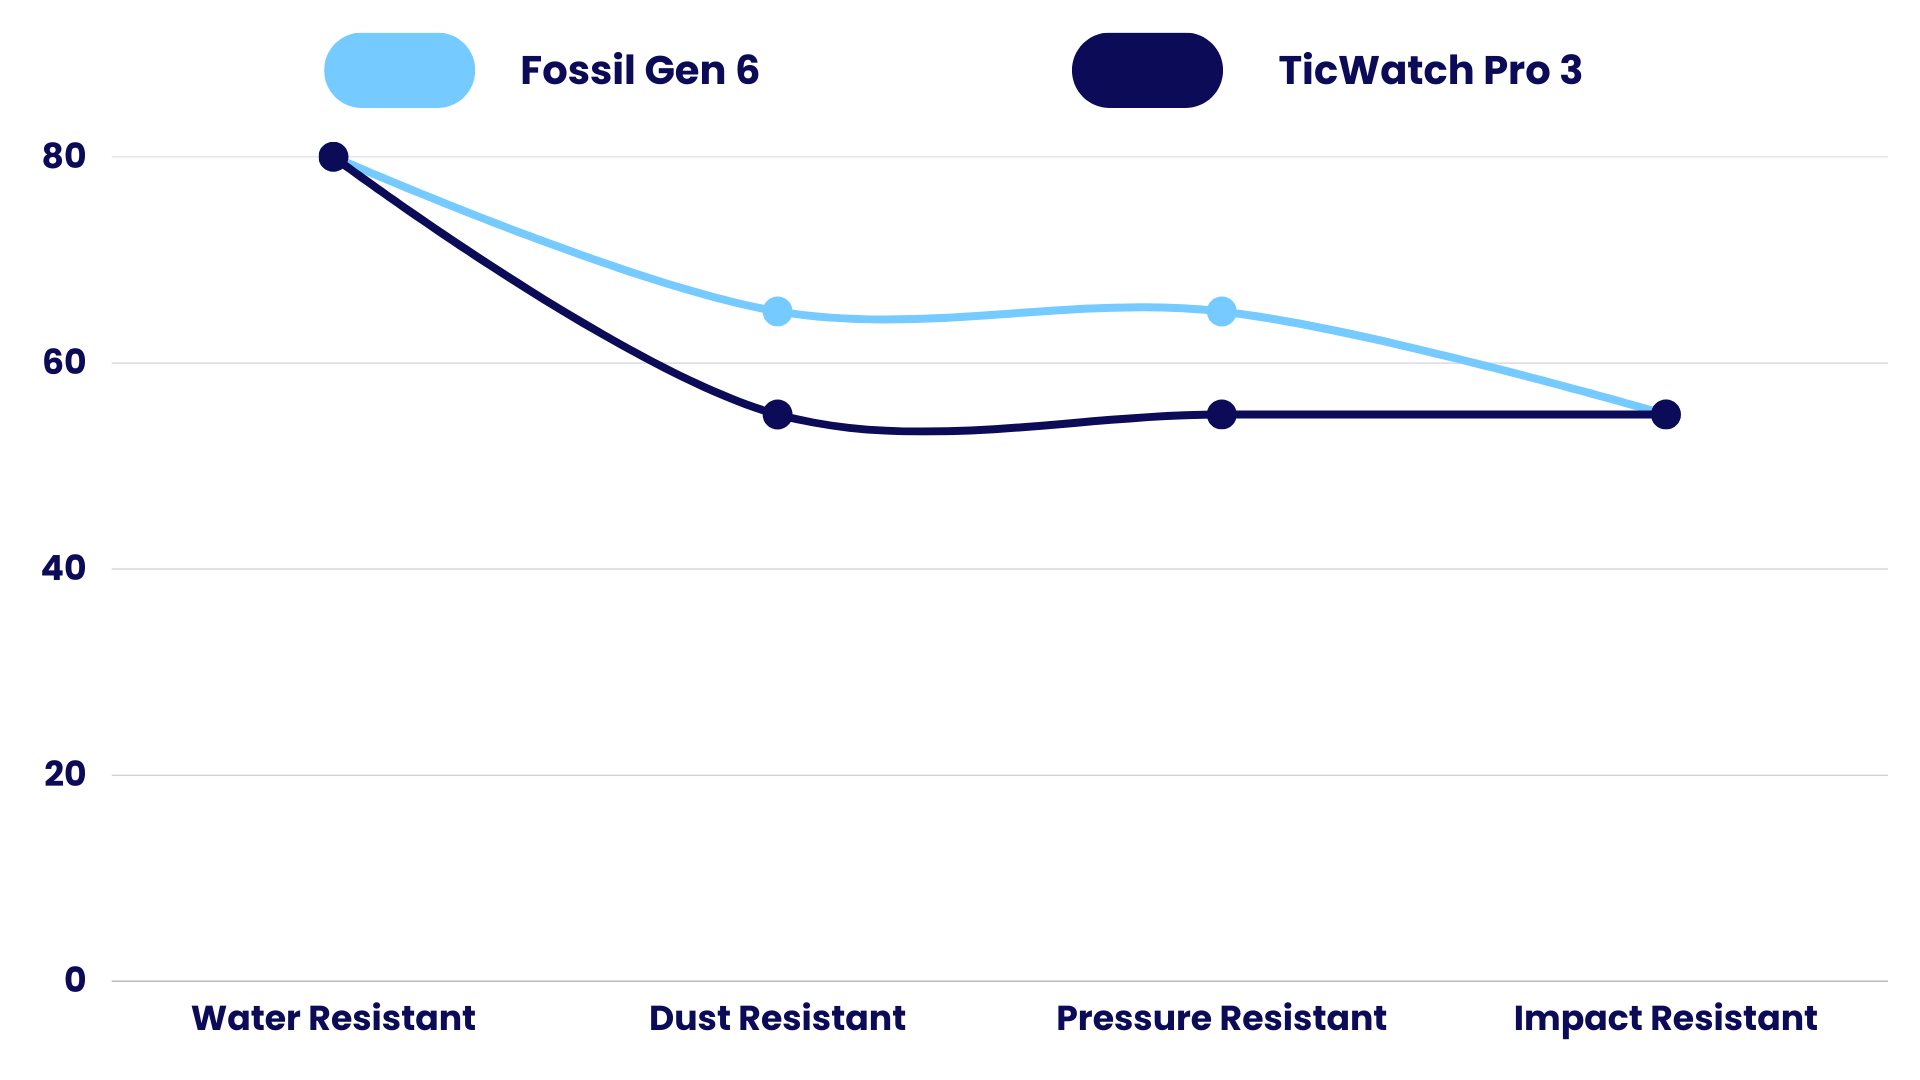 Resistivity Comparison of Fossil Gen 6 vs TicWatch Pro 3